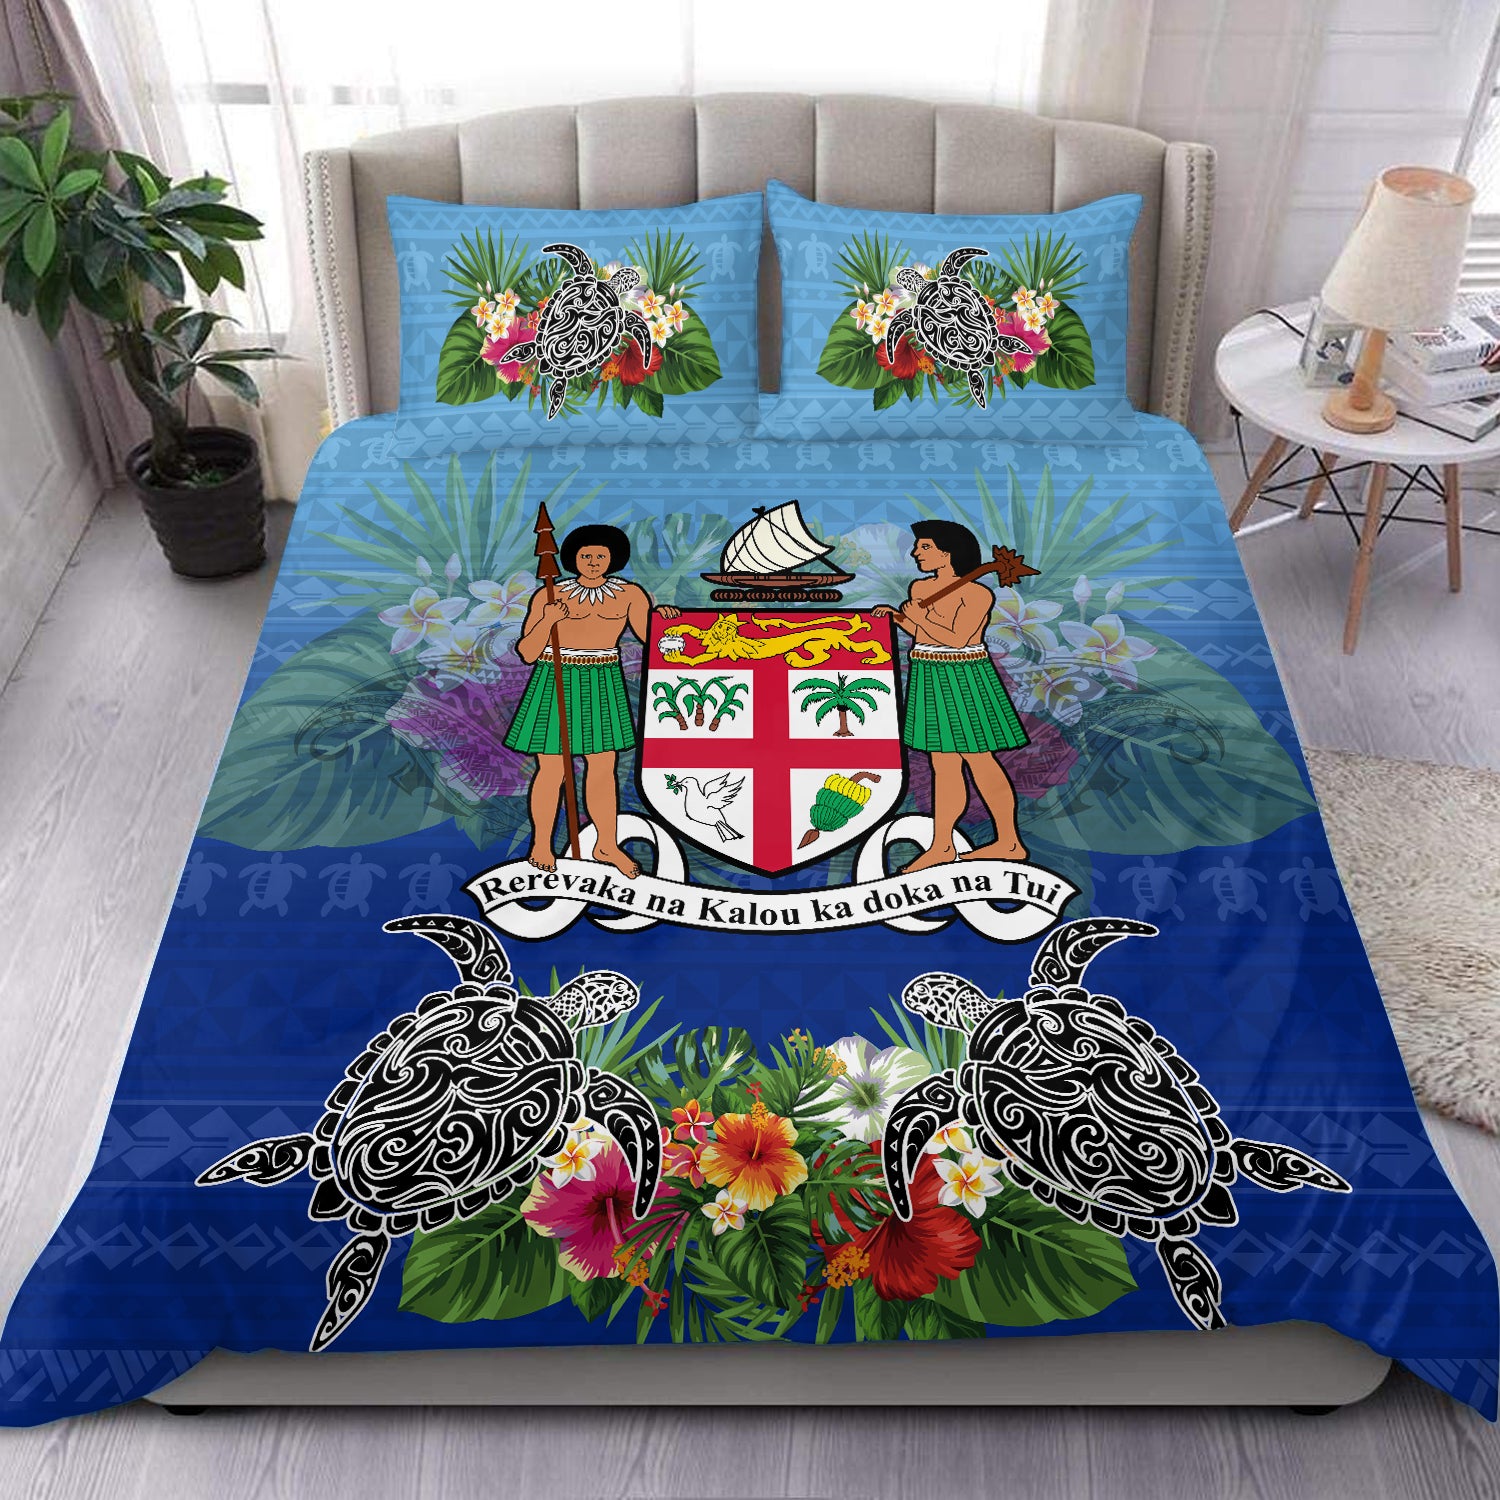 Fiji Bedding Sets - Fijian patterns ver1 Blue - LT20 Blue - Polynesian Pride